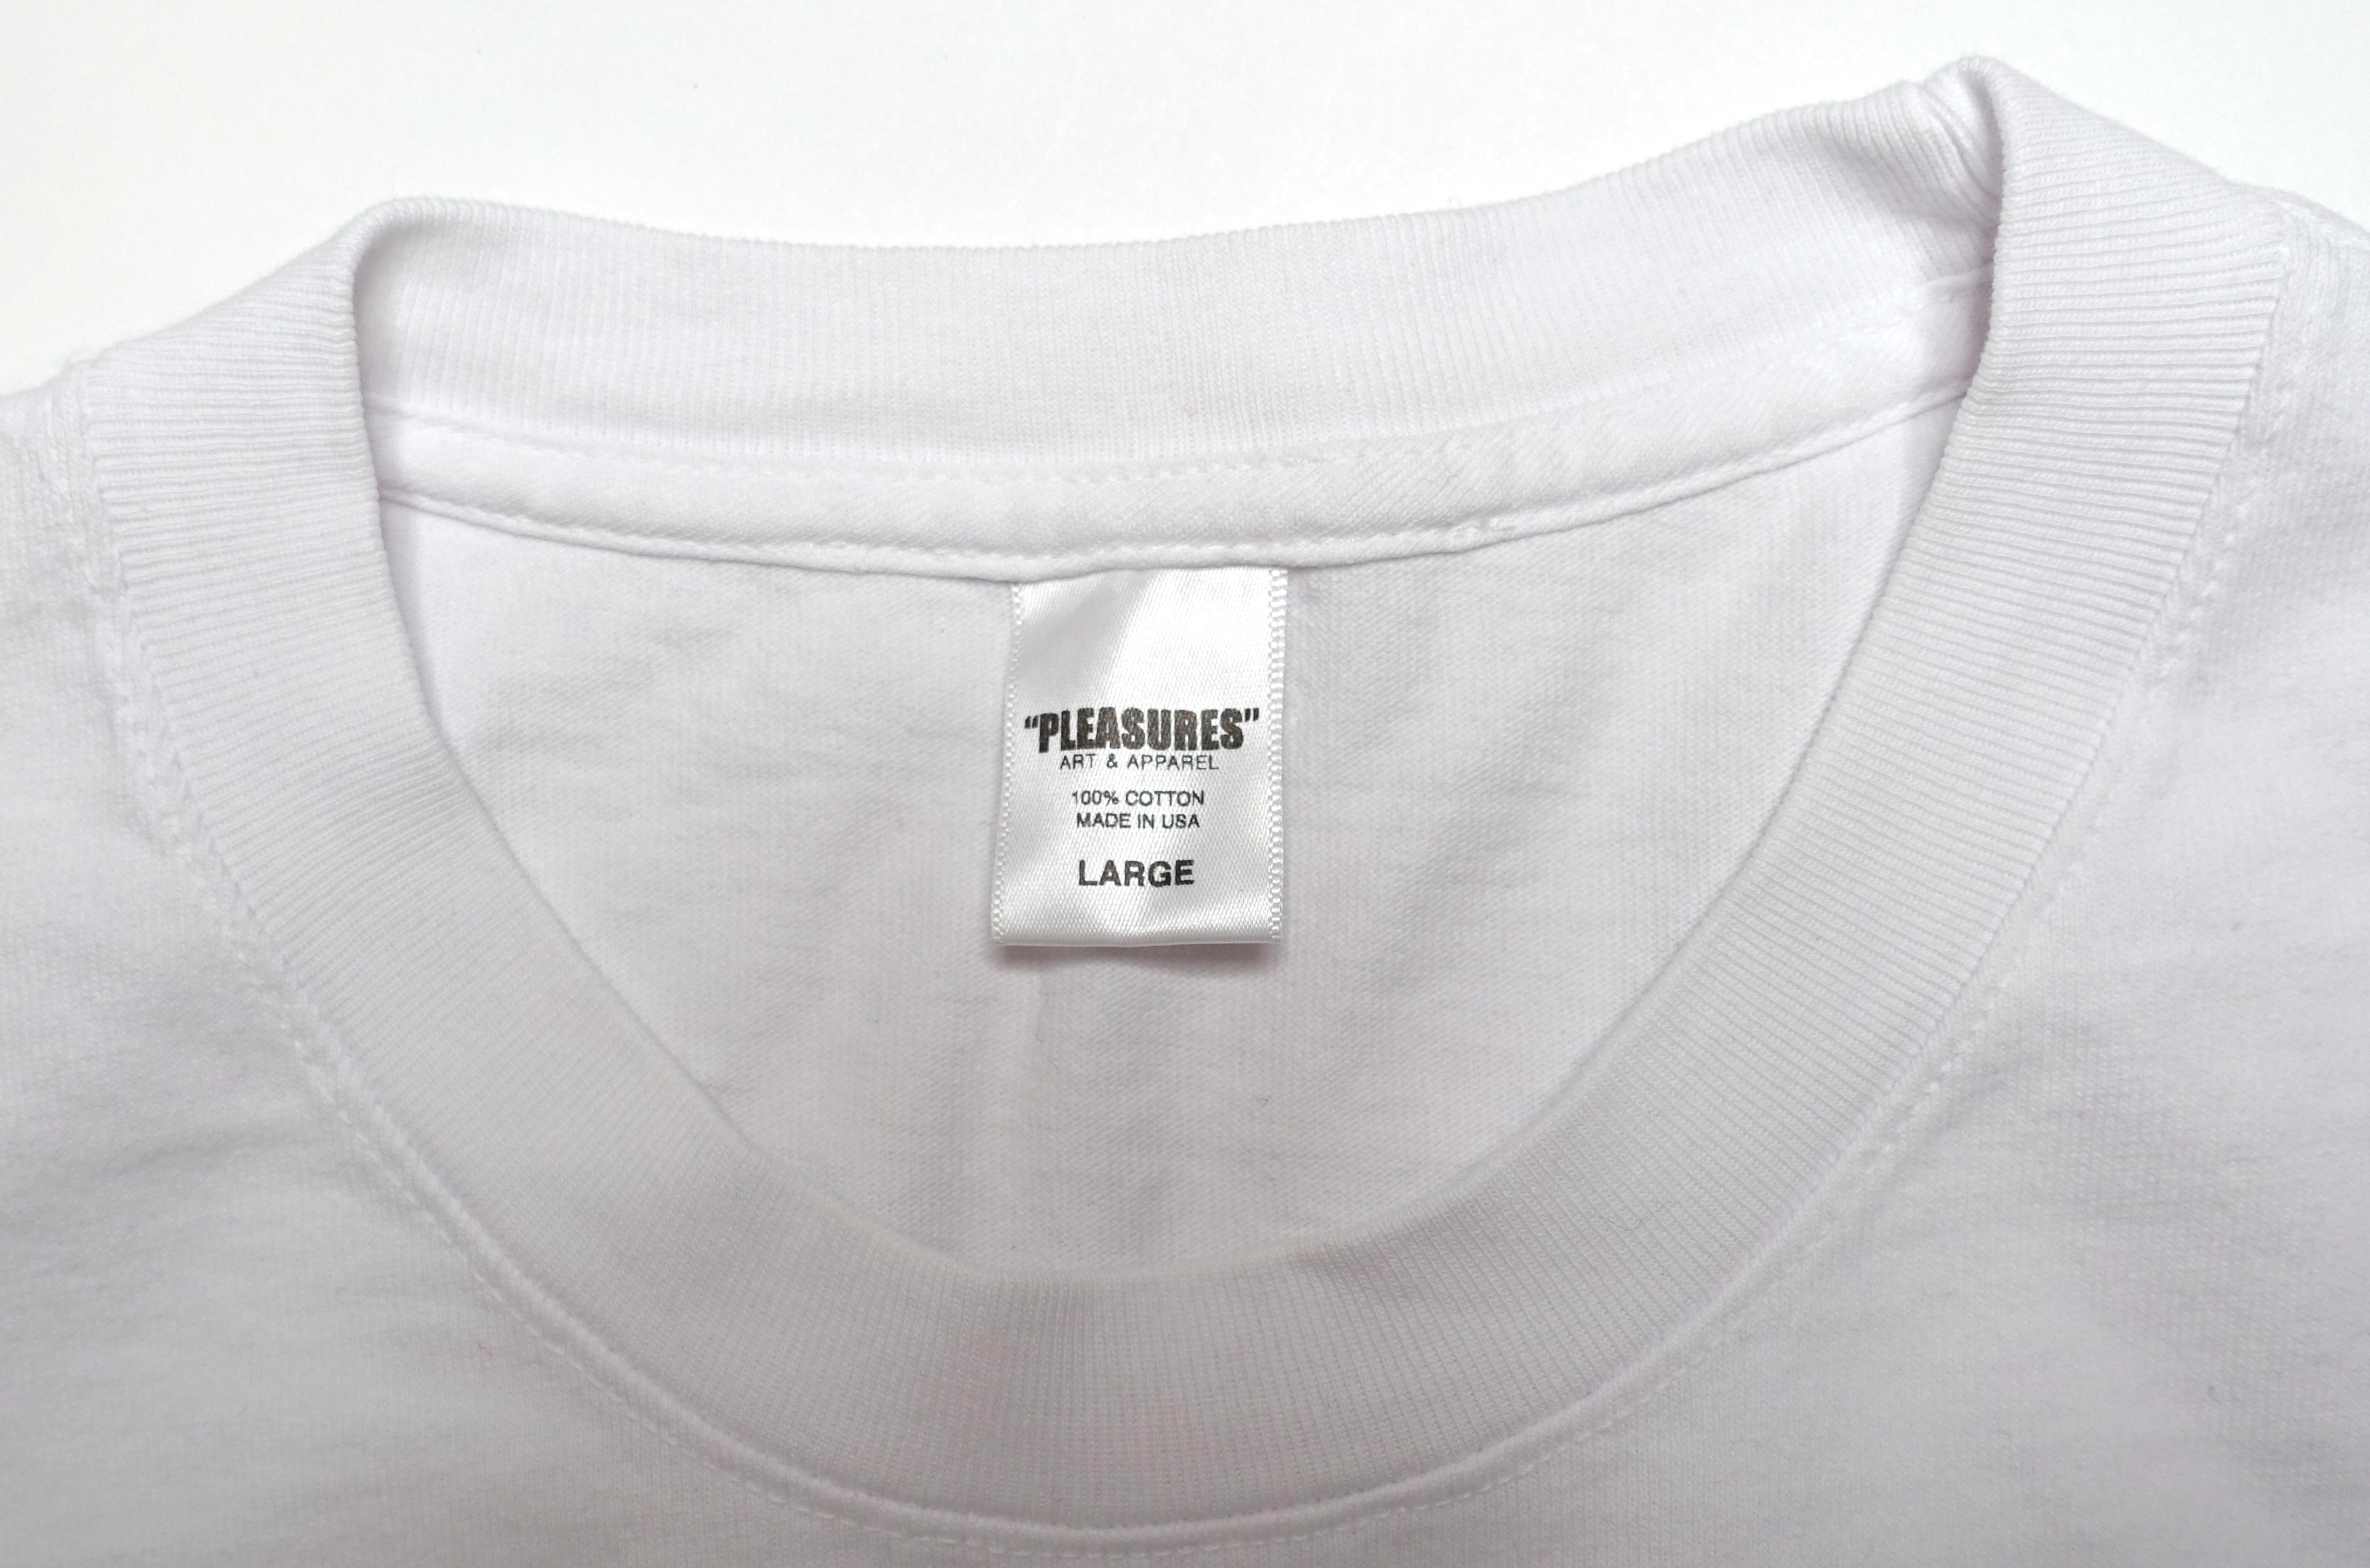 Morrissey - Pleasures Art & Apparel (not licensed) Shirt Size Large